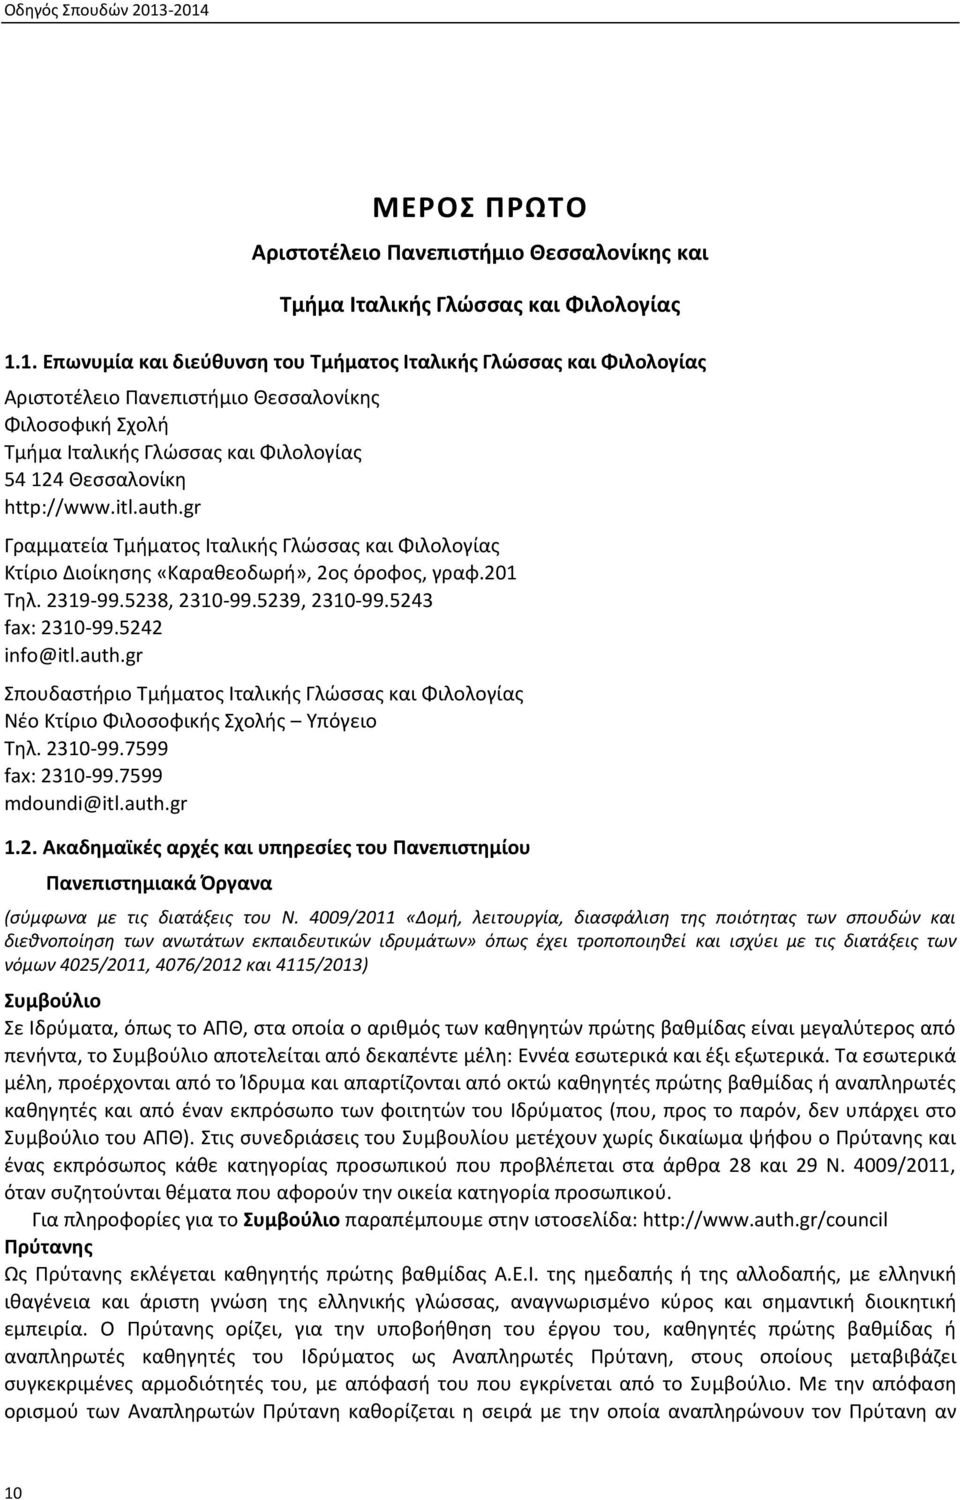 2310-99.7599 fax: 2310-99.7599 mdoundi@itl.auth.gr 1.2. Ακαδημαϊκές αρχές υπηρεσίες του Πανεπιστημίου Πανεπιστημιακά Όργανα (σύμφωνα με τις διατάξεις του Ν.